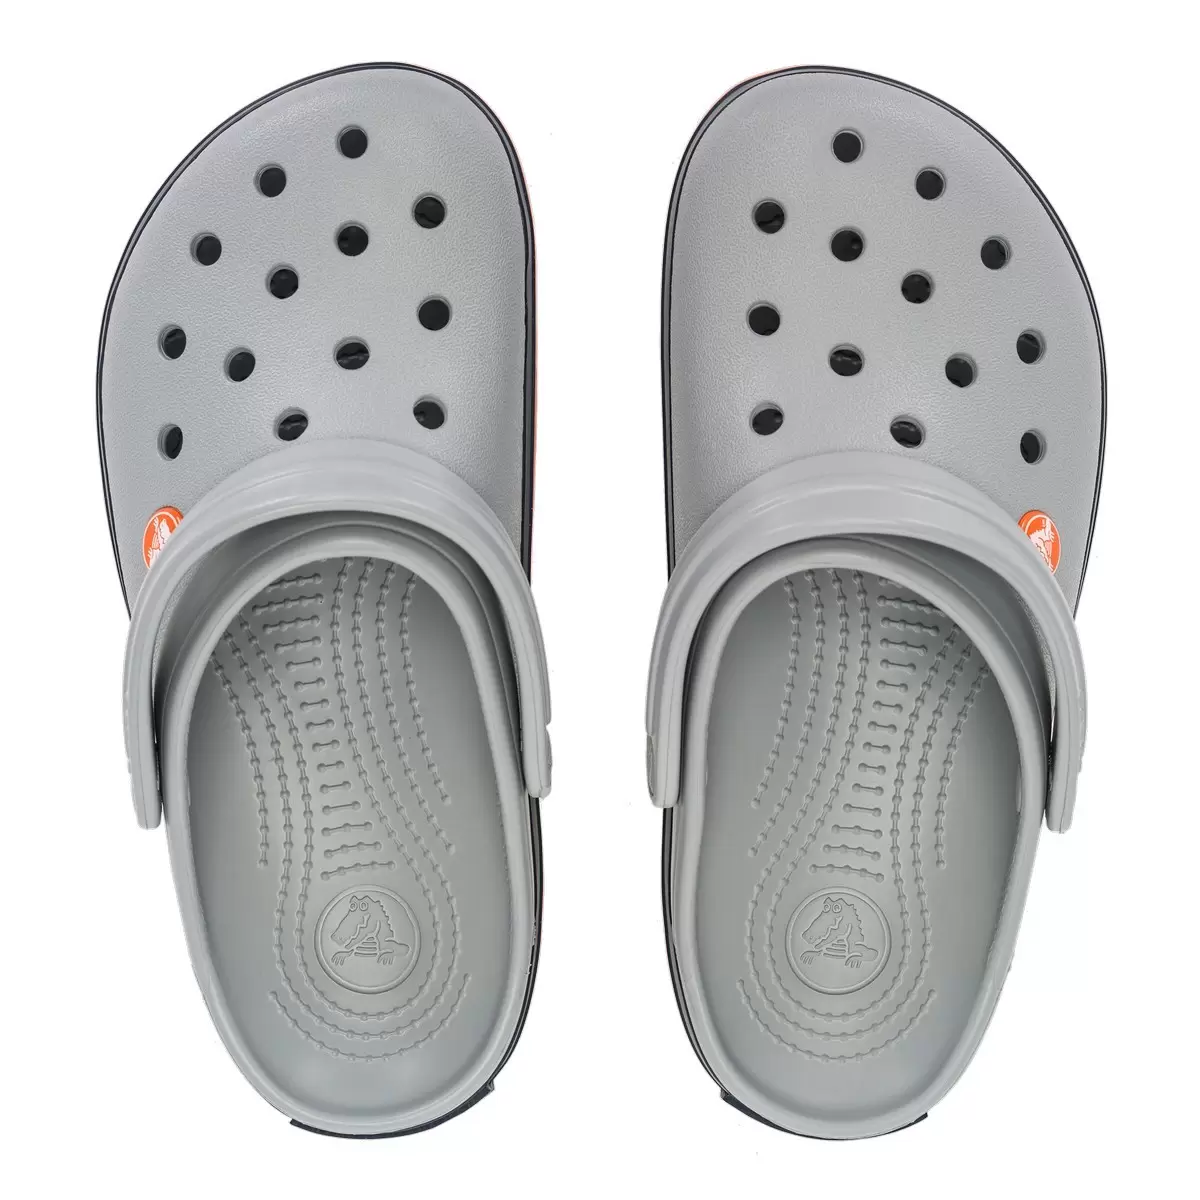 Crocs 中性款涼鞋 灰底橘邊條 US 5